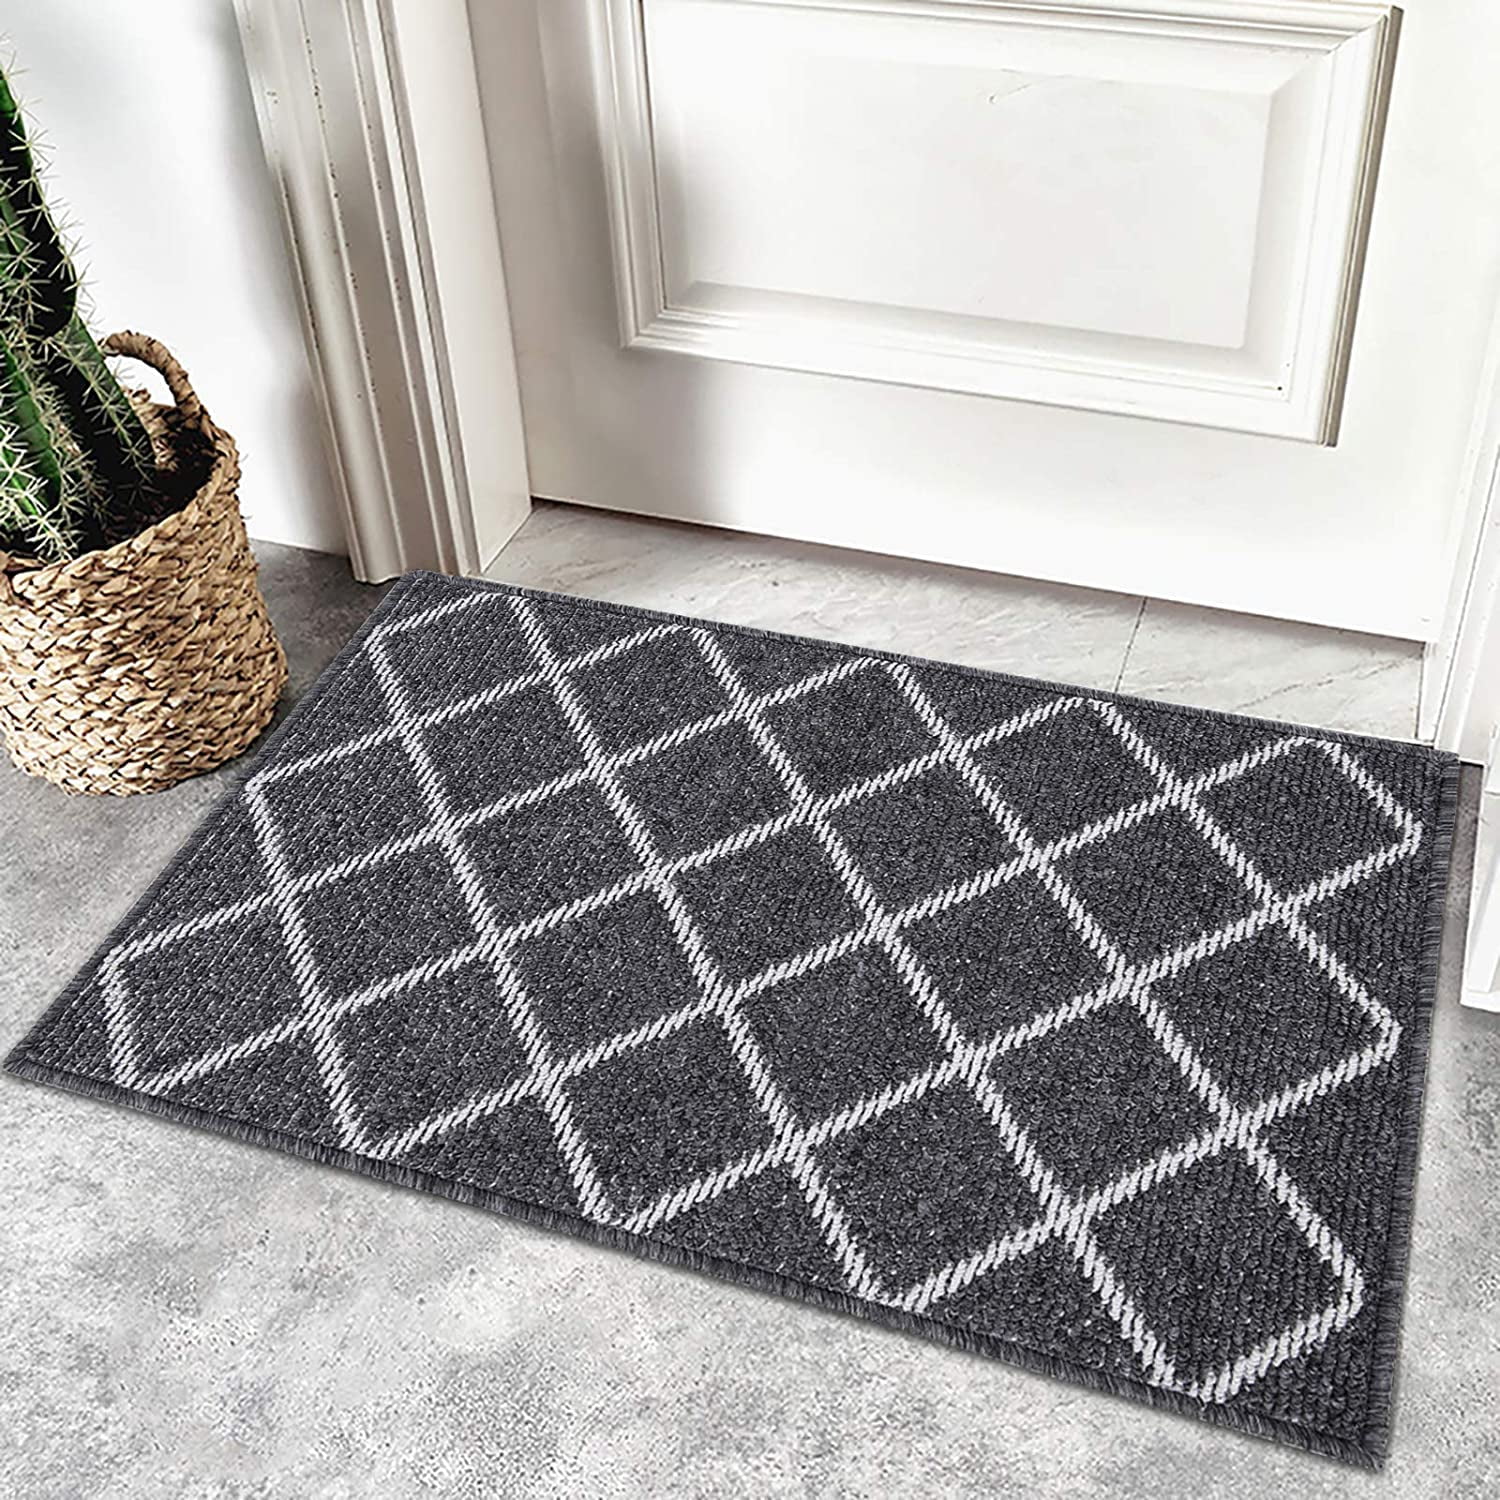 Cof Carvapet 2 Piece Non-Slip Kitchen Mat Rubber Backing Doormat Runner Rug Set 